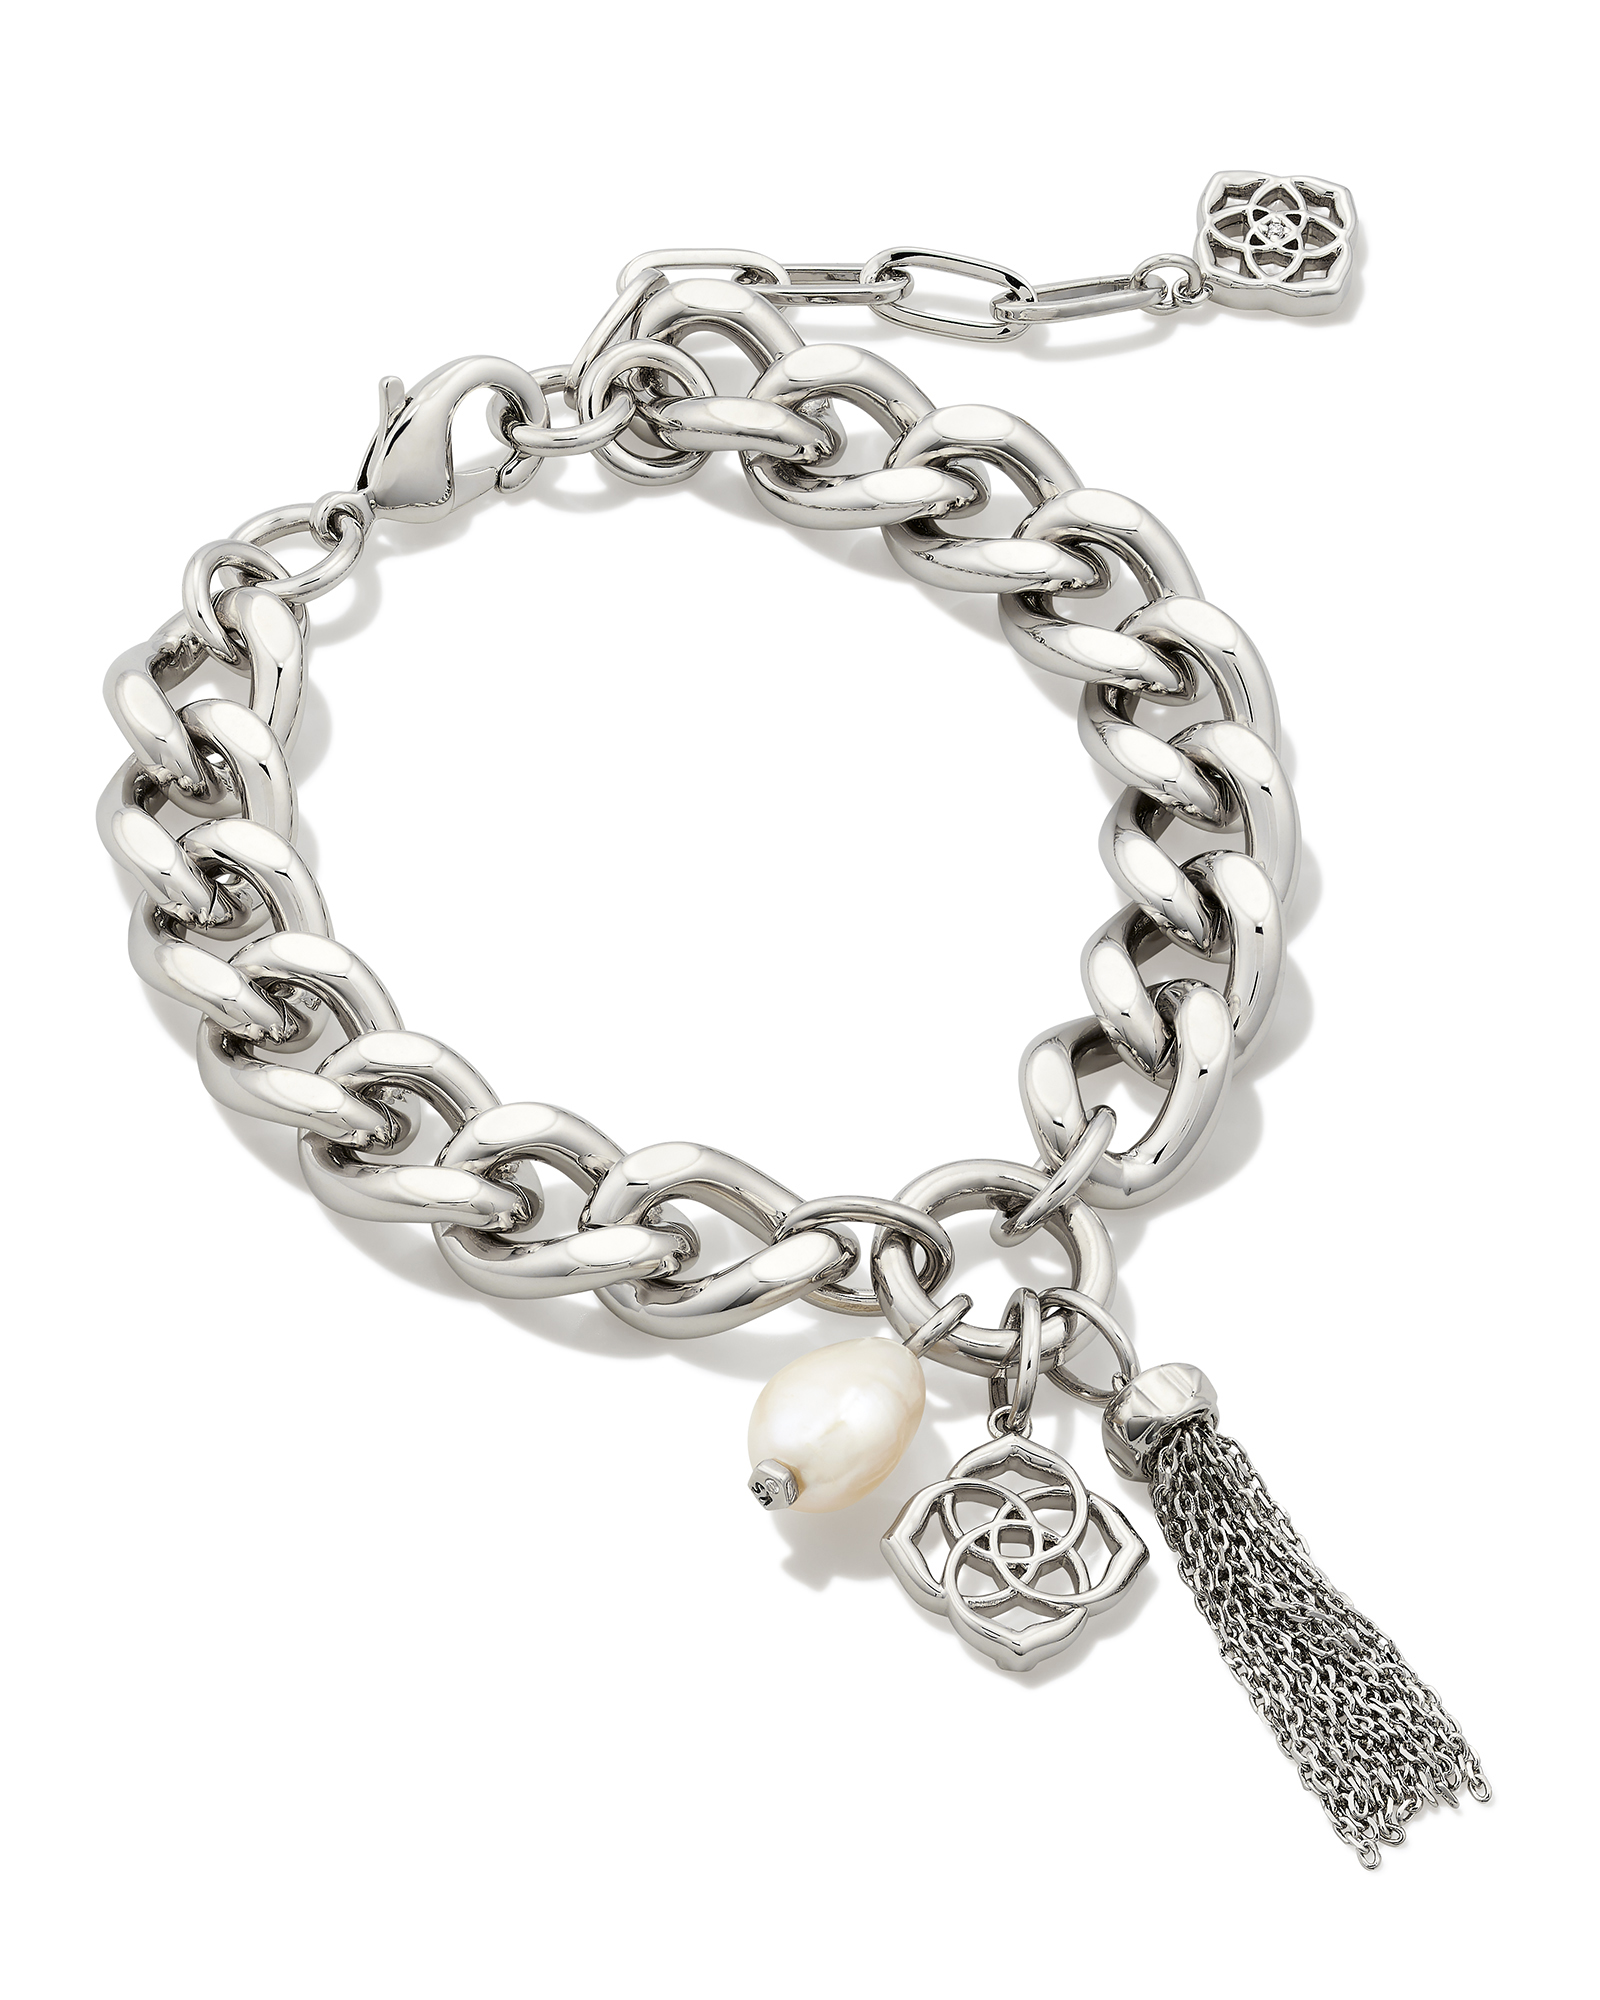 Everleigh Silver Chain Bracelet in White Pearl | Kendra Scott